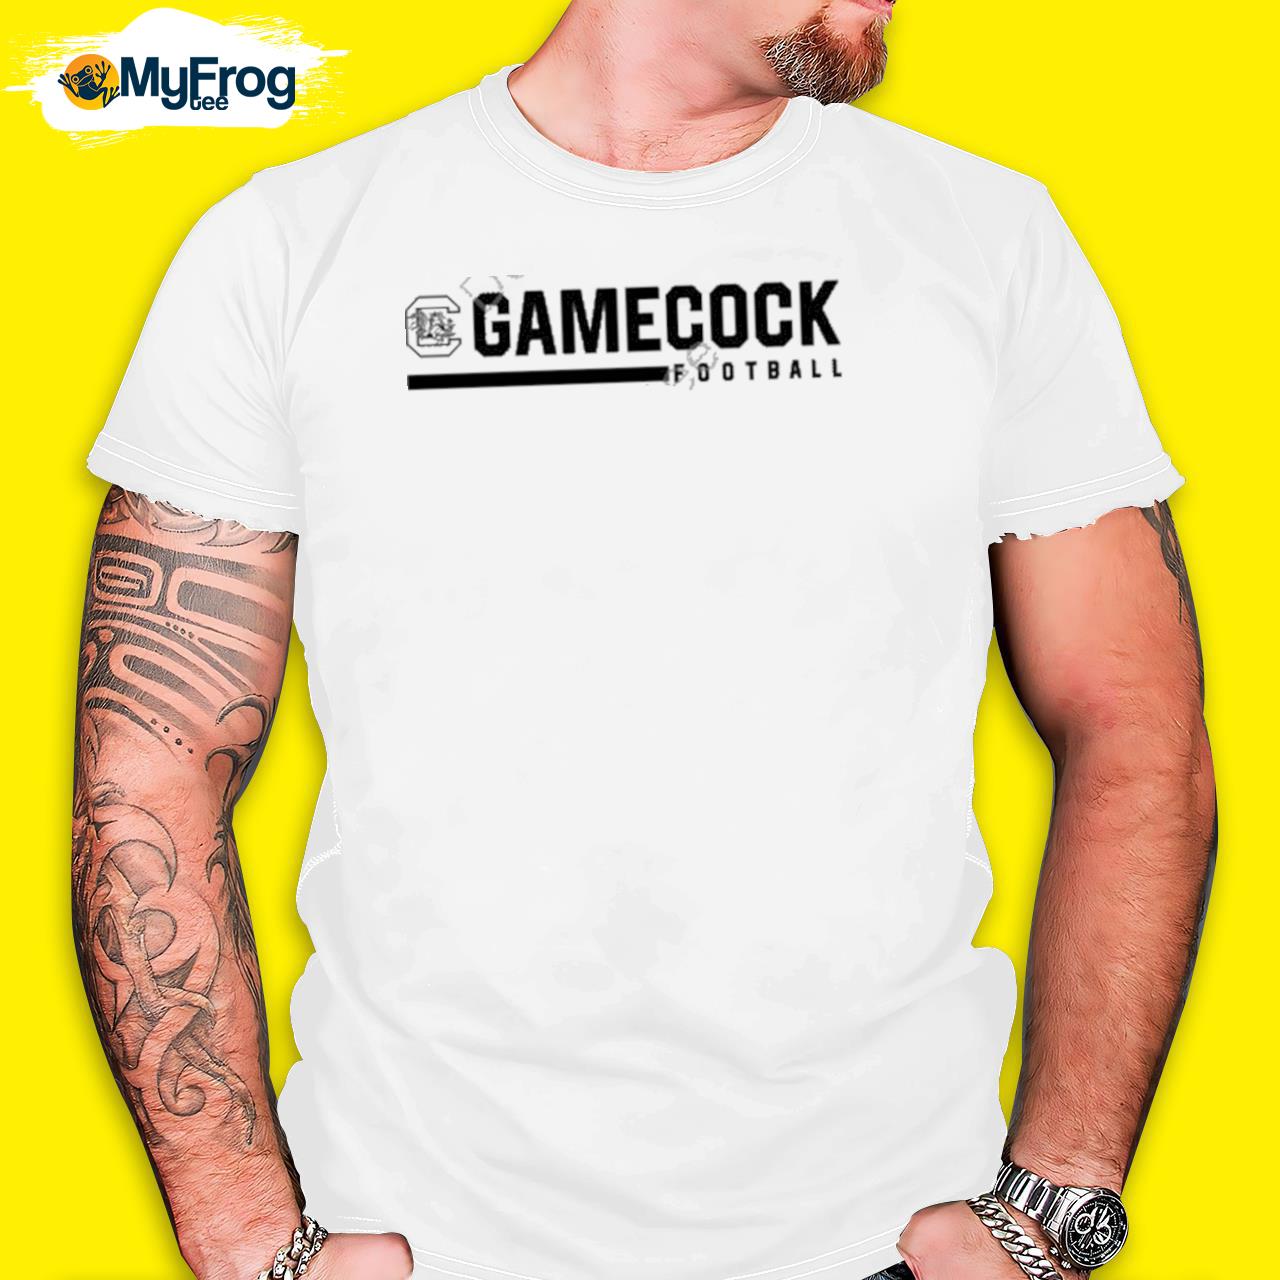 Cam smith wearing gamecock Football shirt